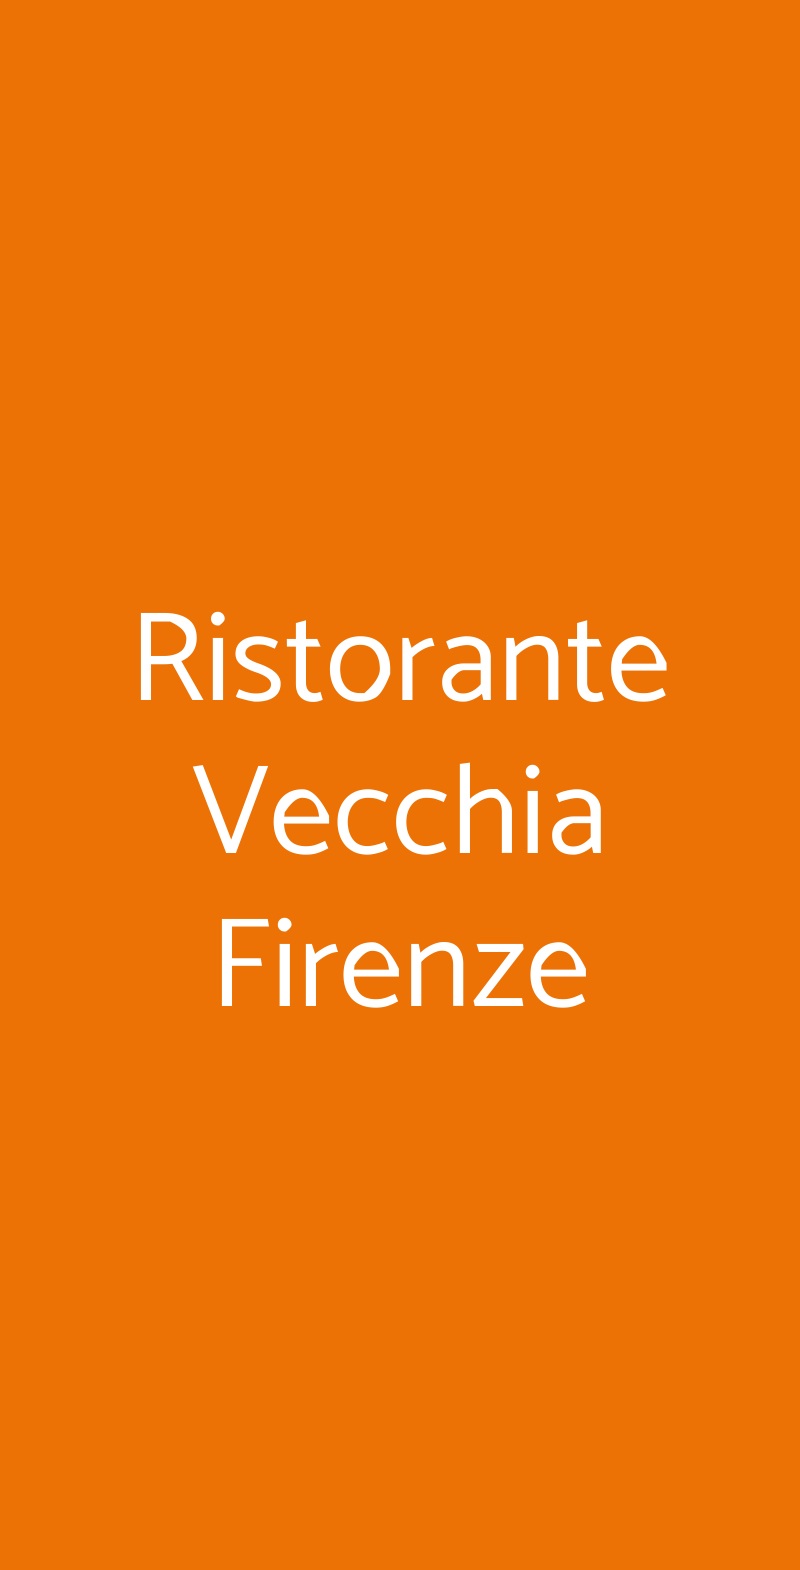 Ristorante Vecchia Firenze Firenze menù 1 pagina